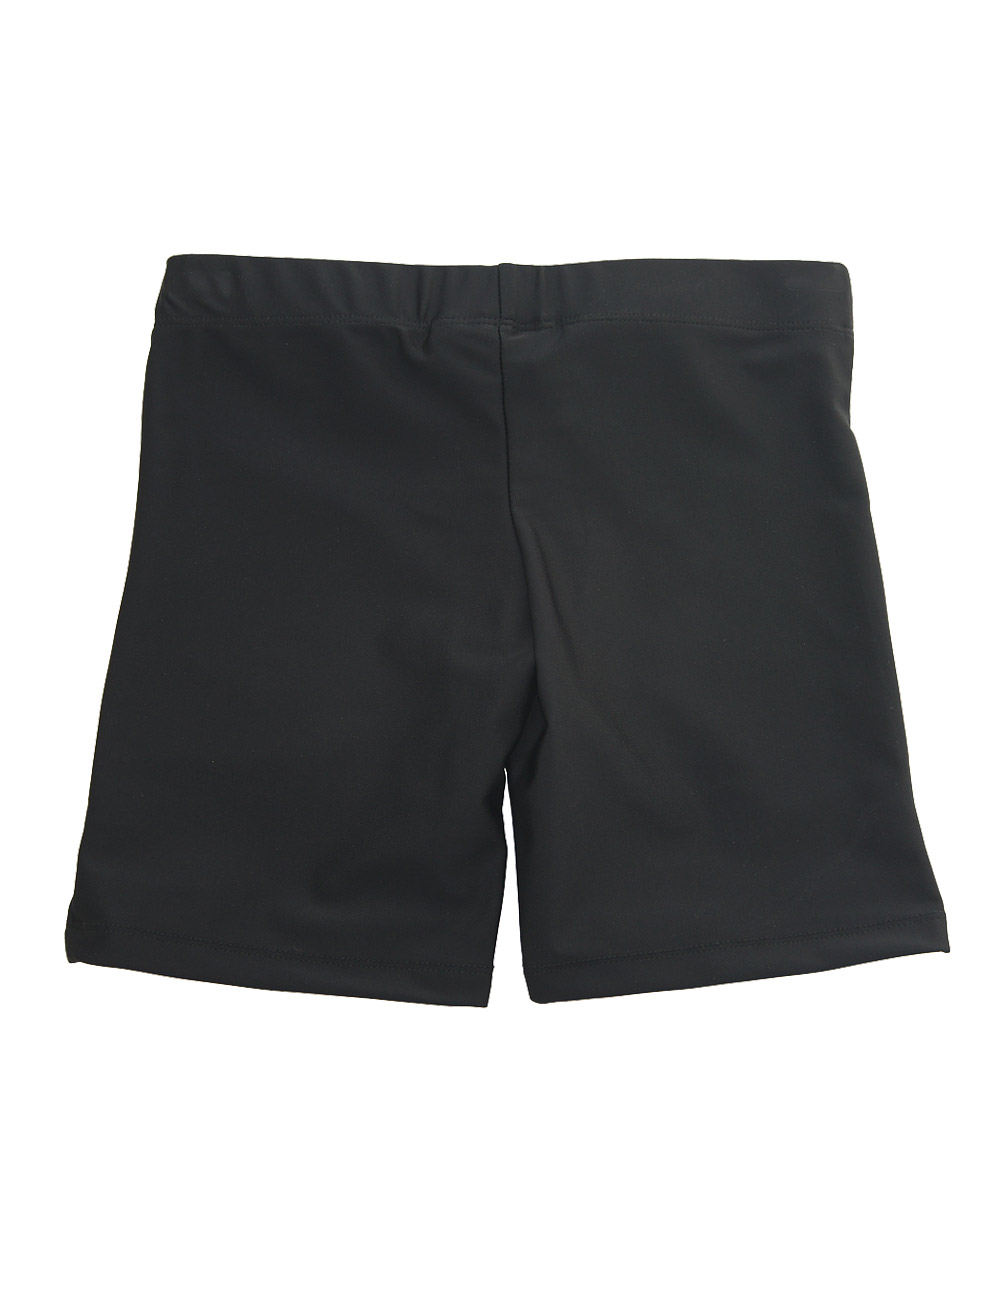 UV Shorts Children's Swimming trunks